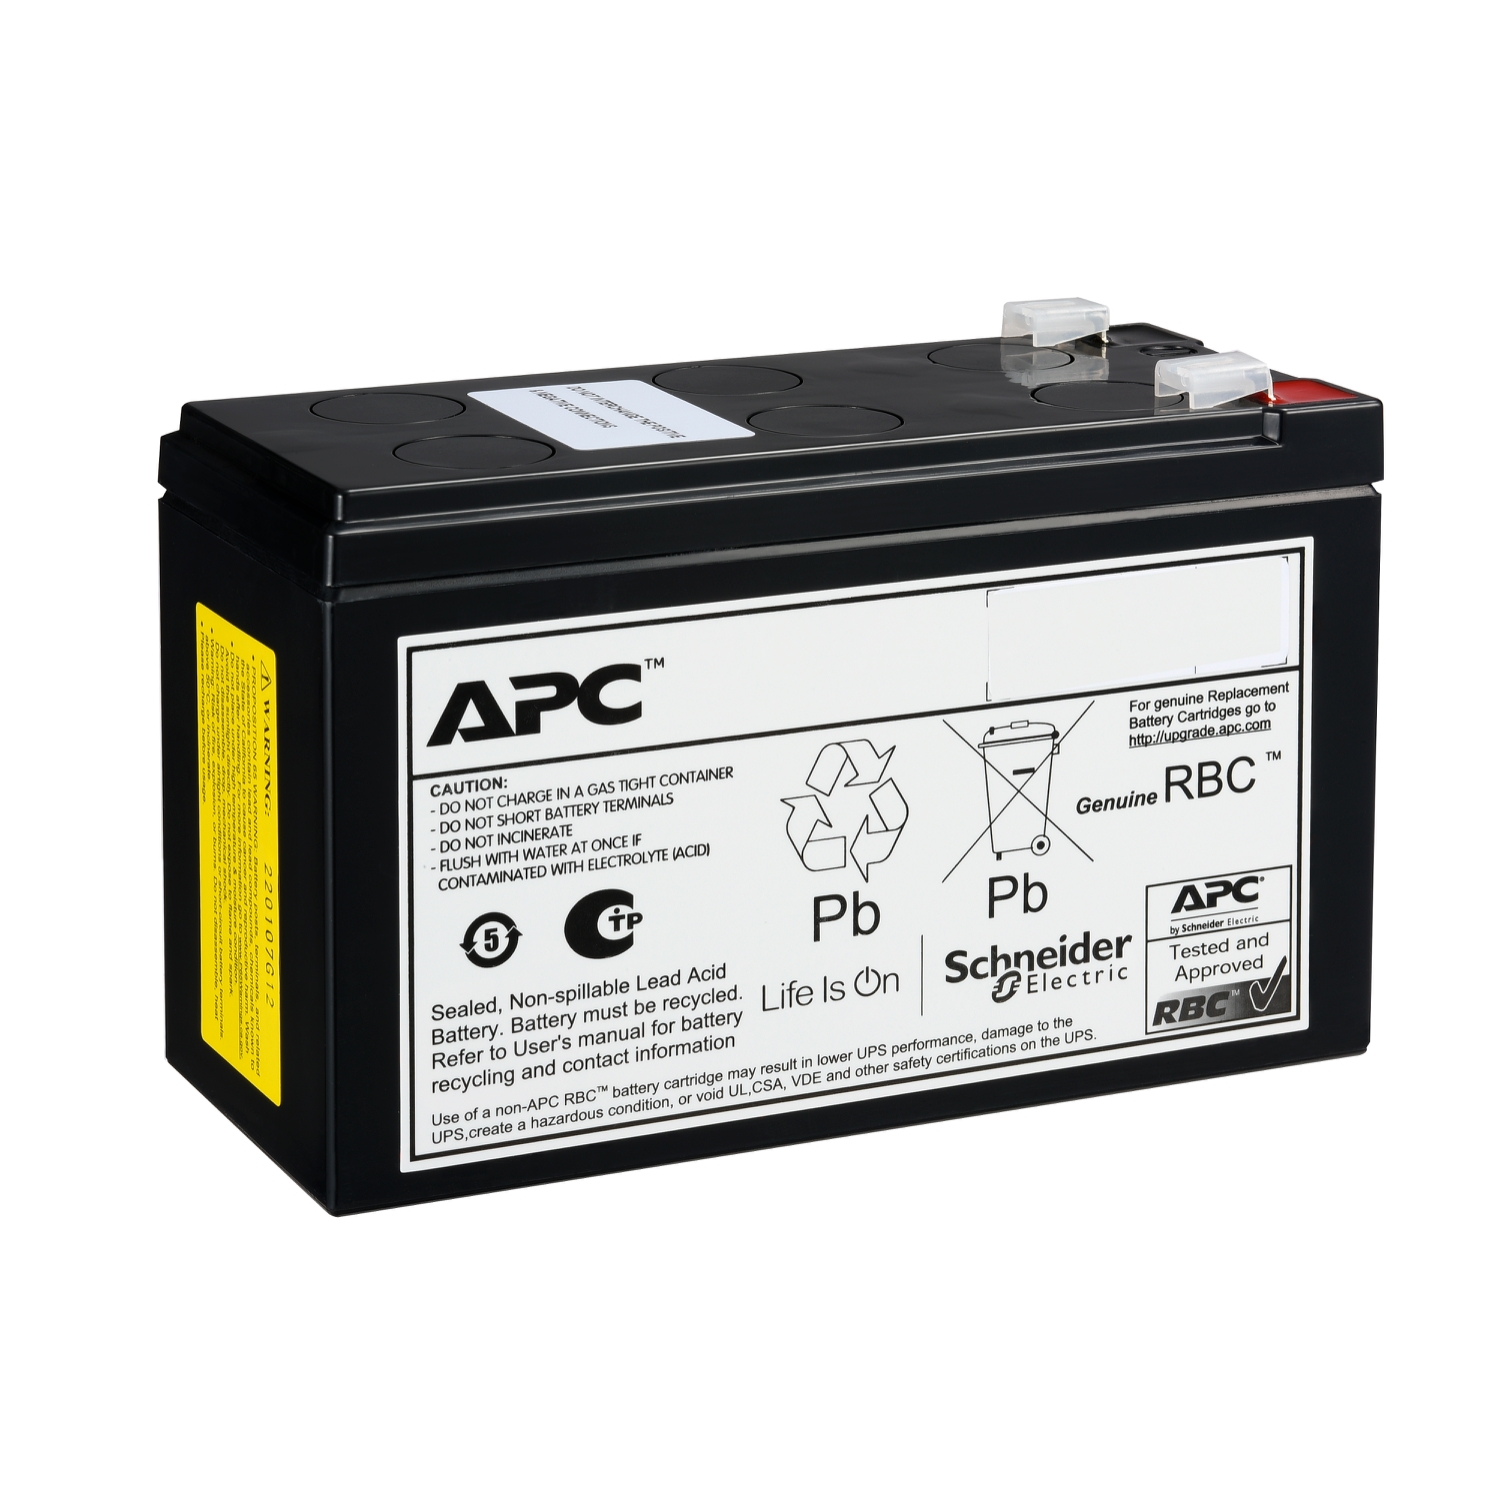 APCRBCV204 APC Replacement Battery Cartridge, VRLA, 9Ah, 48V DC, 2